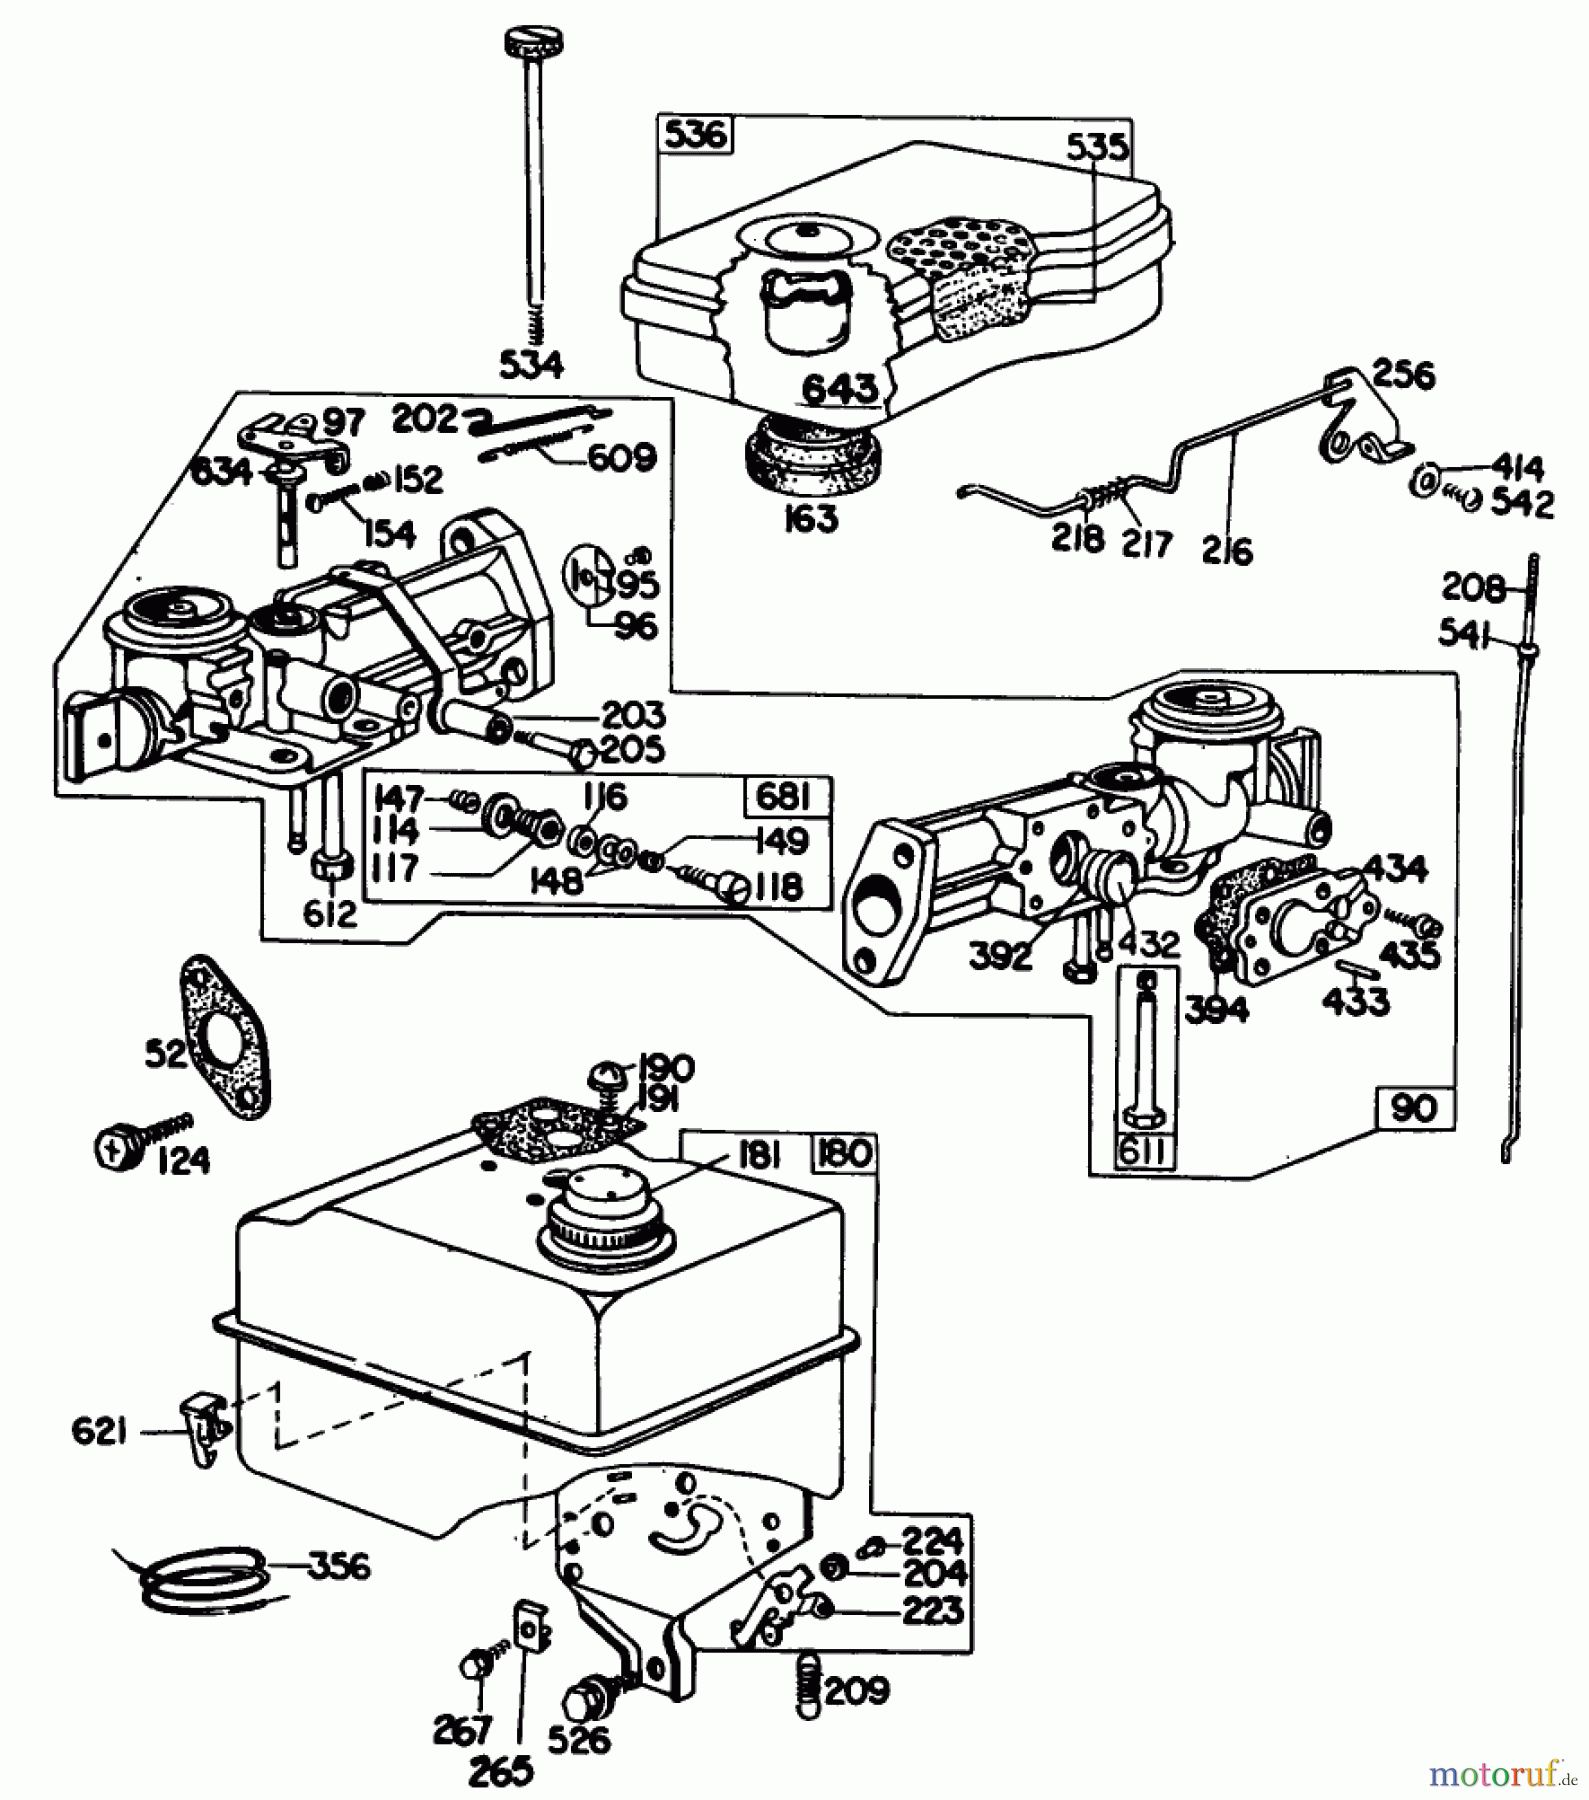  Laubbläser / Laubsauger 62912 - Toro 5 hp Lawn Vacuum (SN: 0000001 - 0999999) (1980) CARBURETOR ASSEMBLY